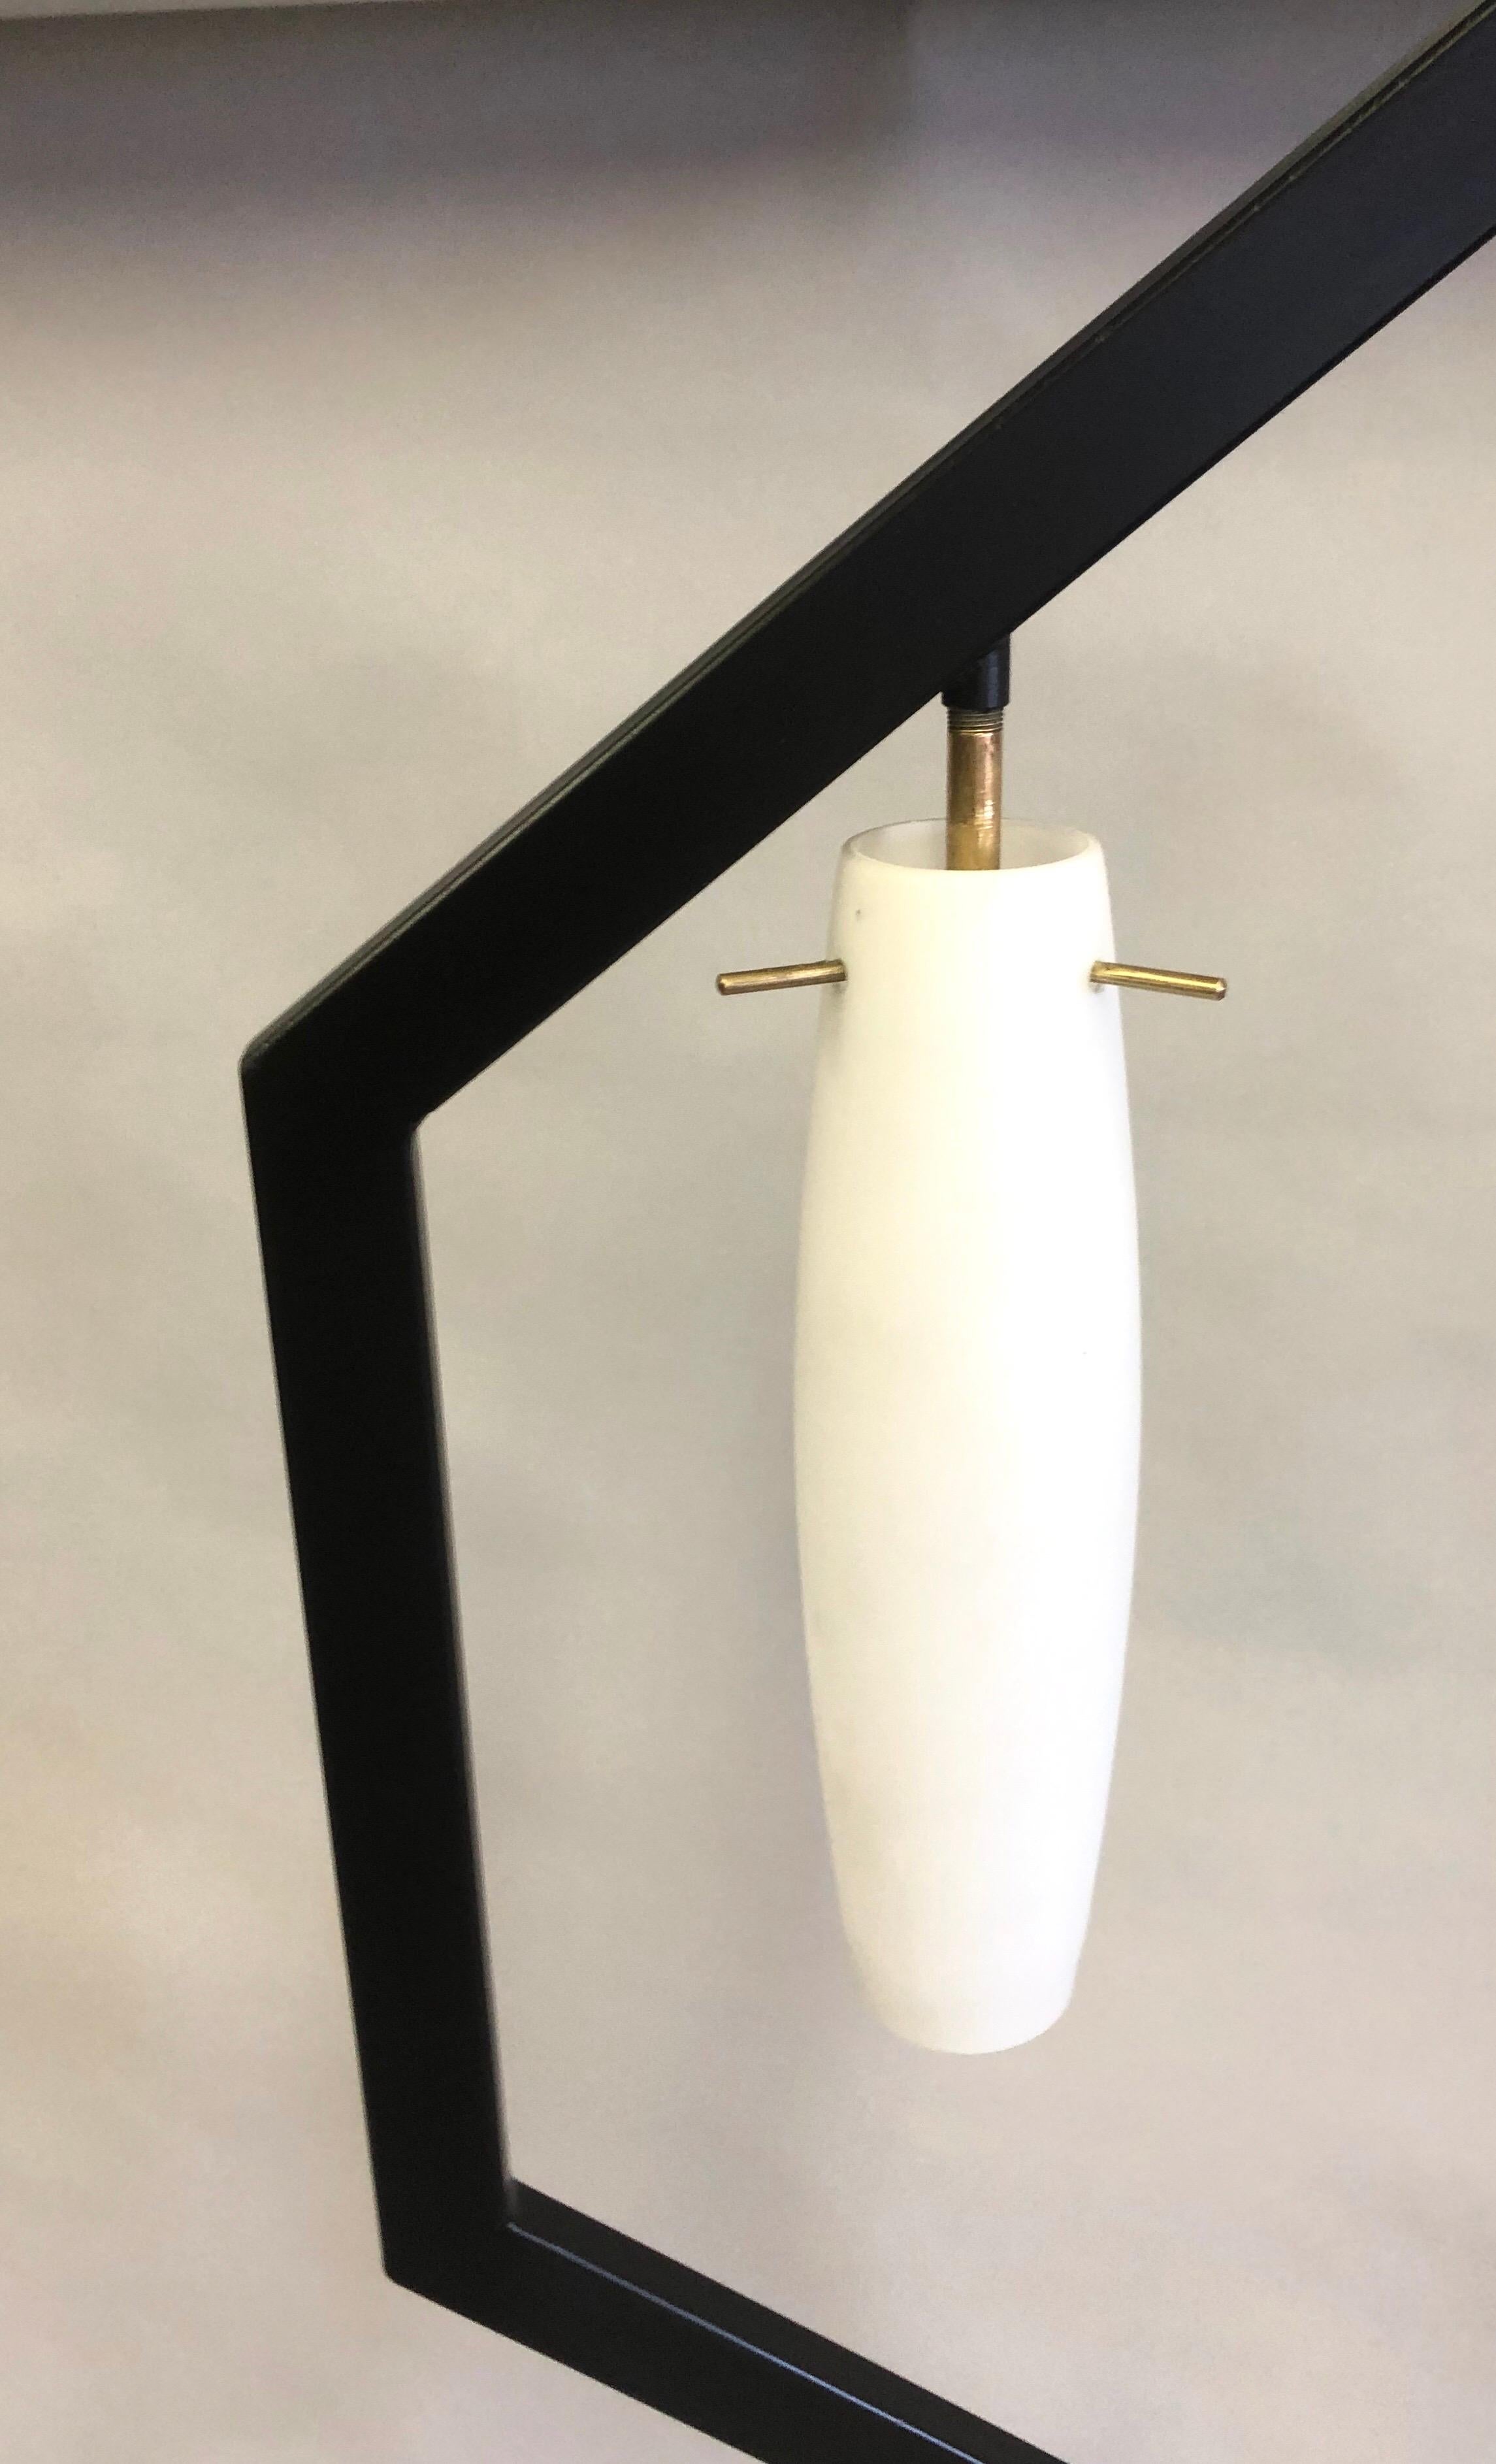 Italian Mid-Century Modern Floor Lamp in the style of Arredoluce For Sale 1